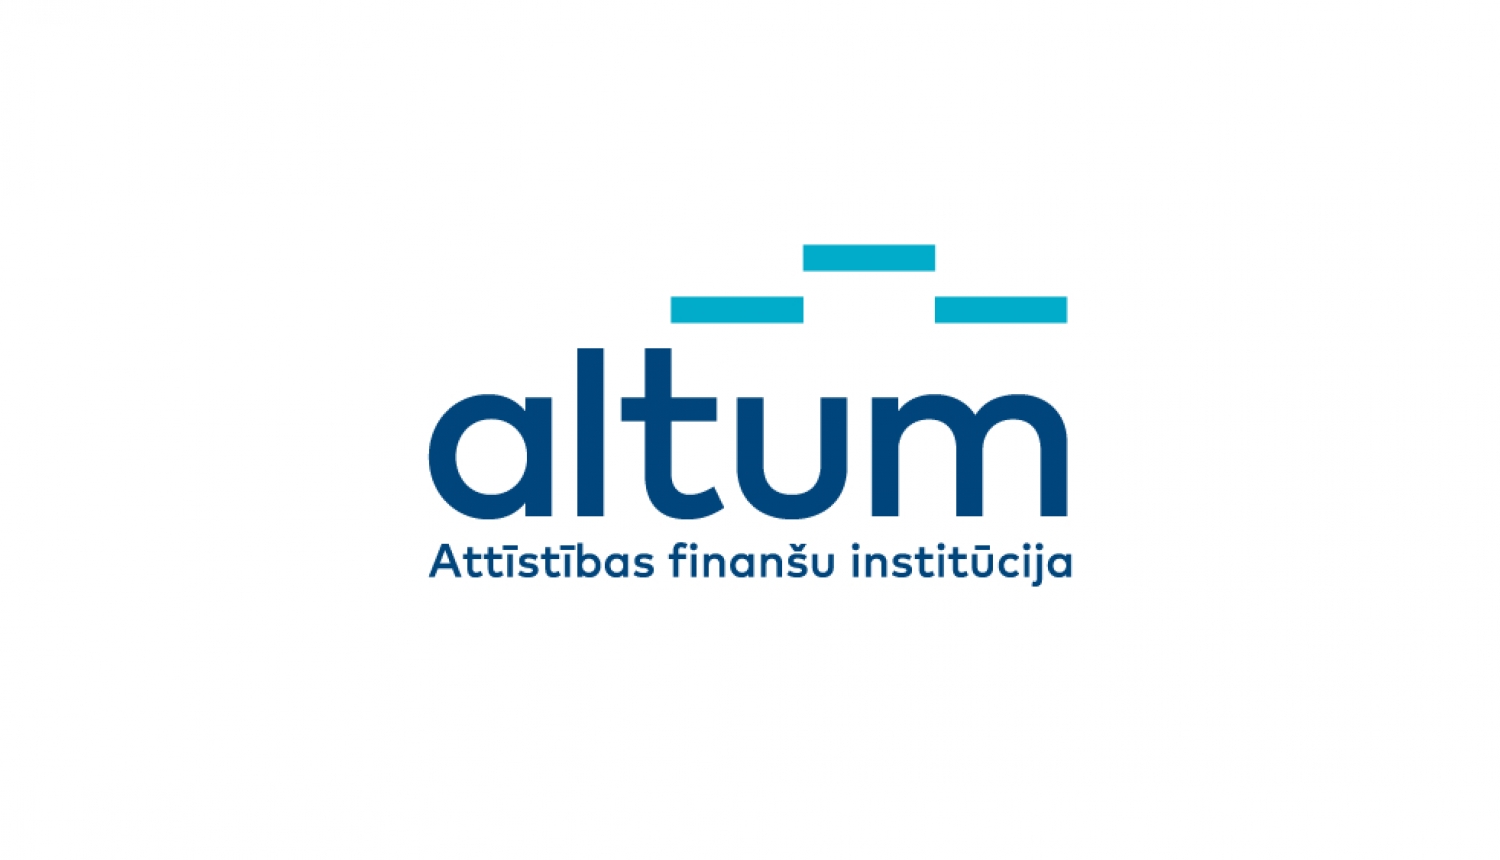 ALTUM logo